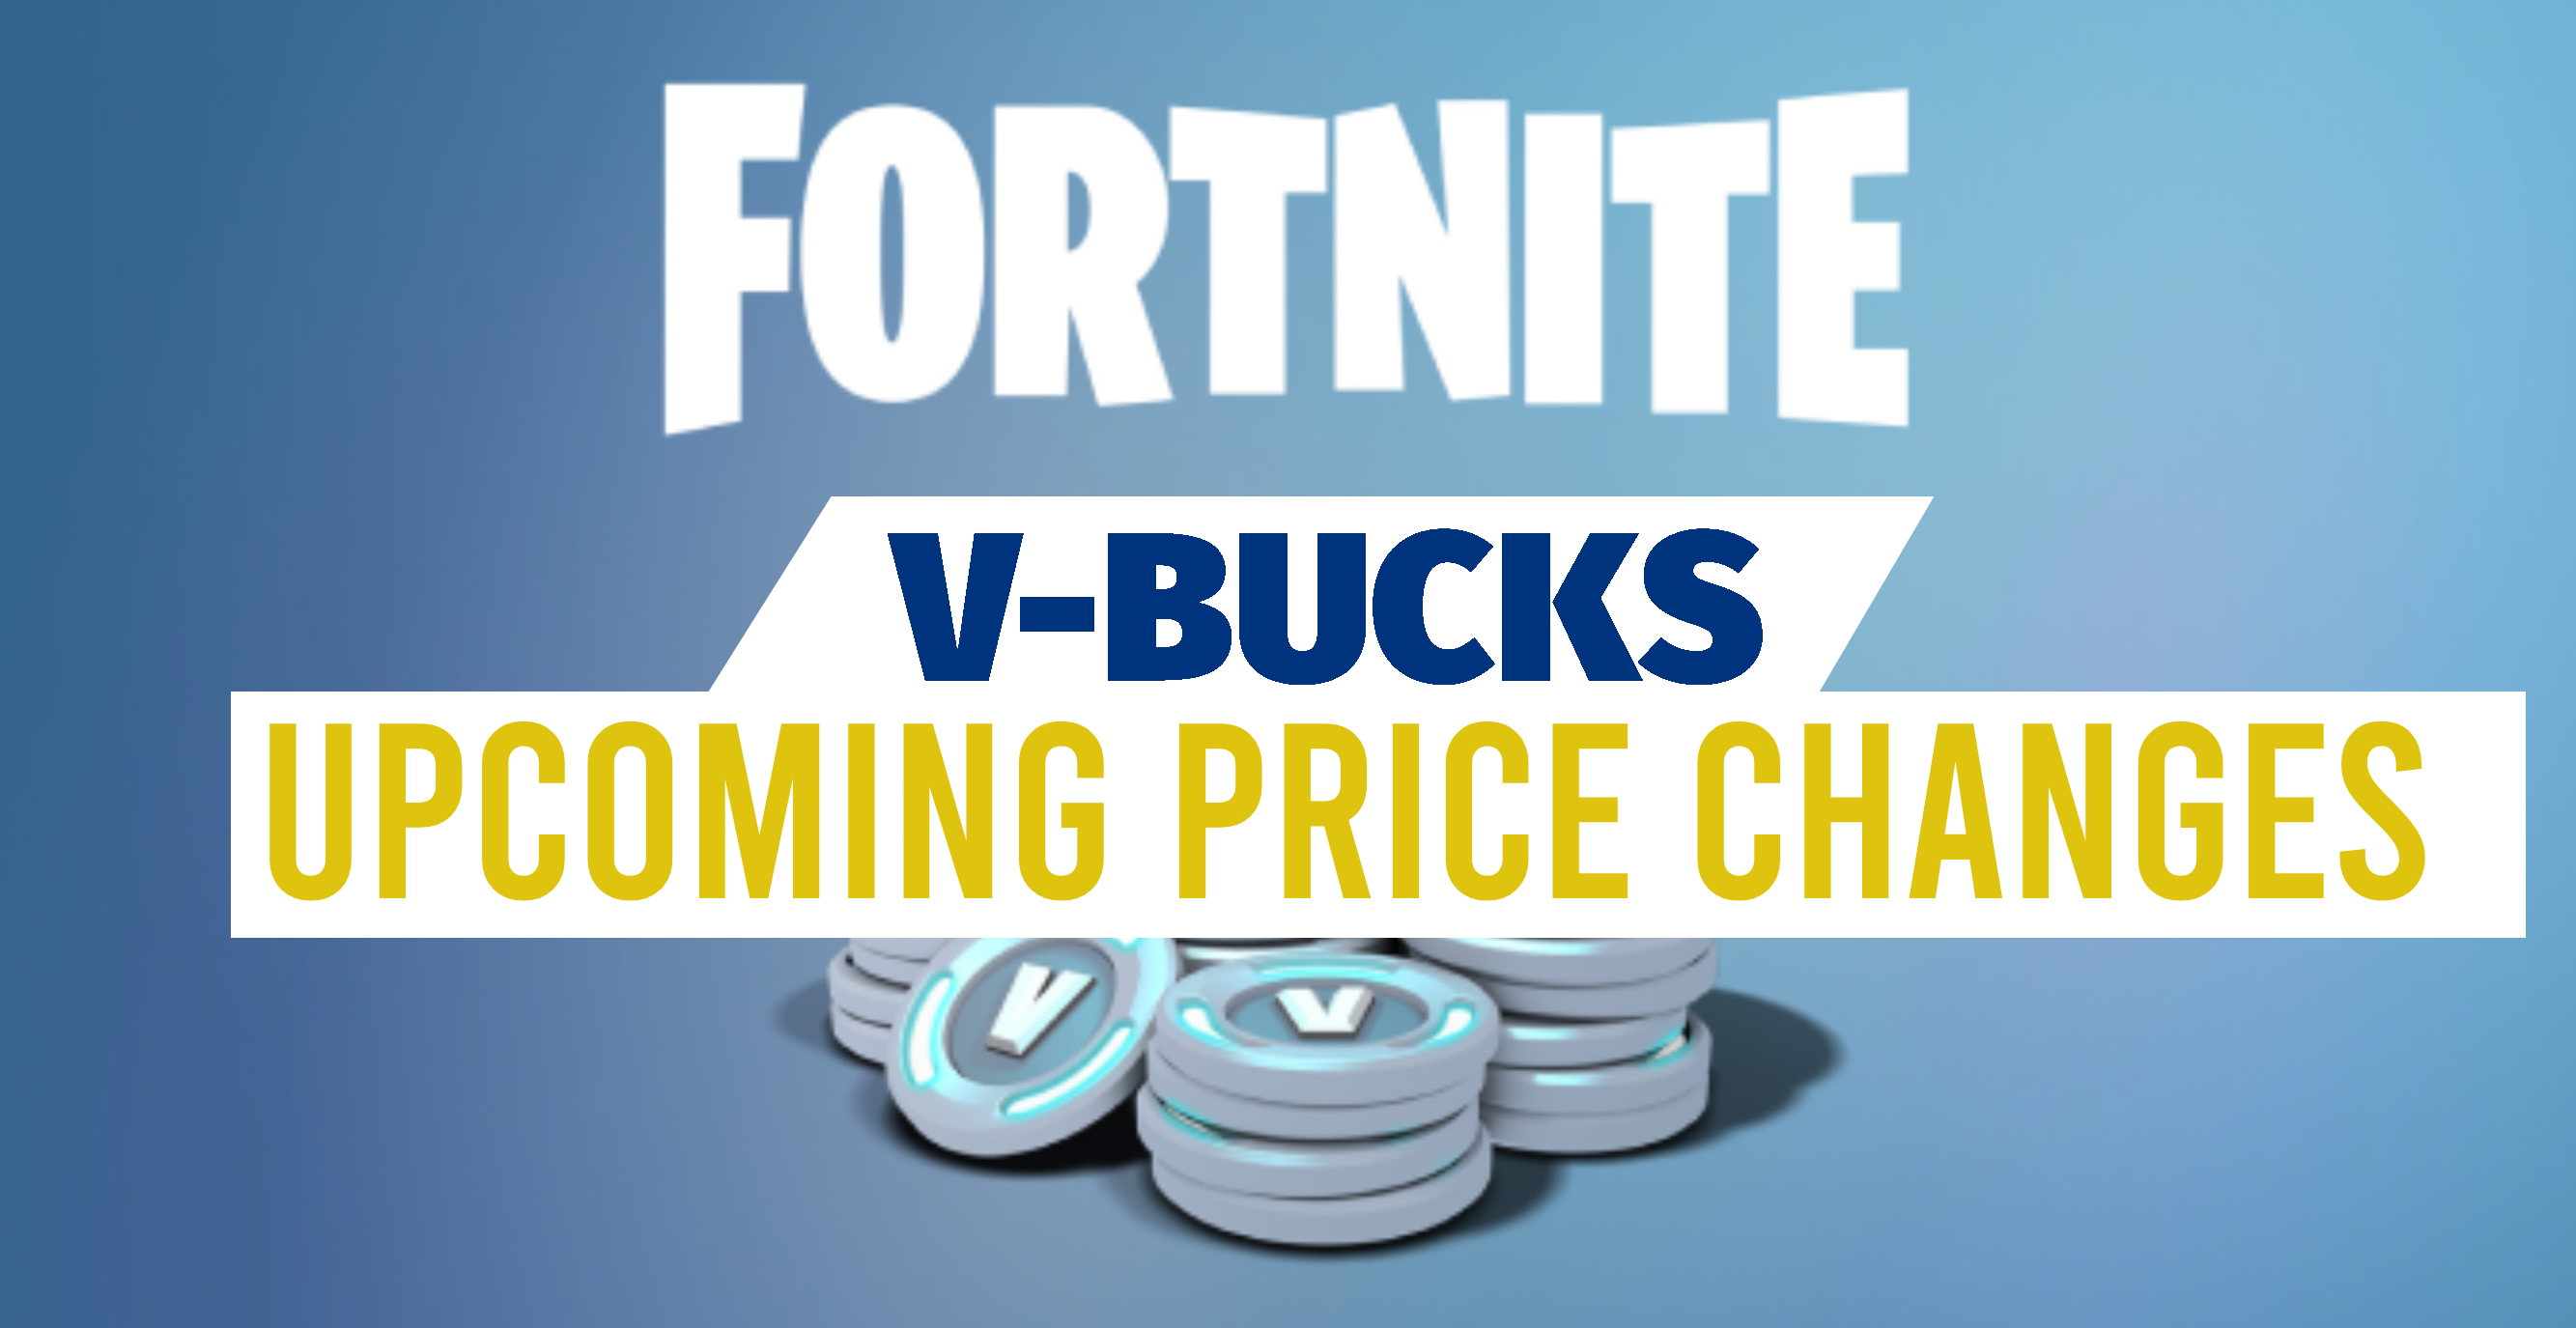 Fortnite announces V-Bucks price increase in multiple countries